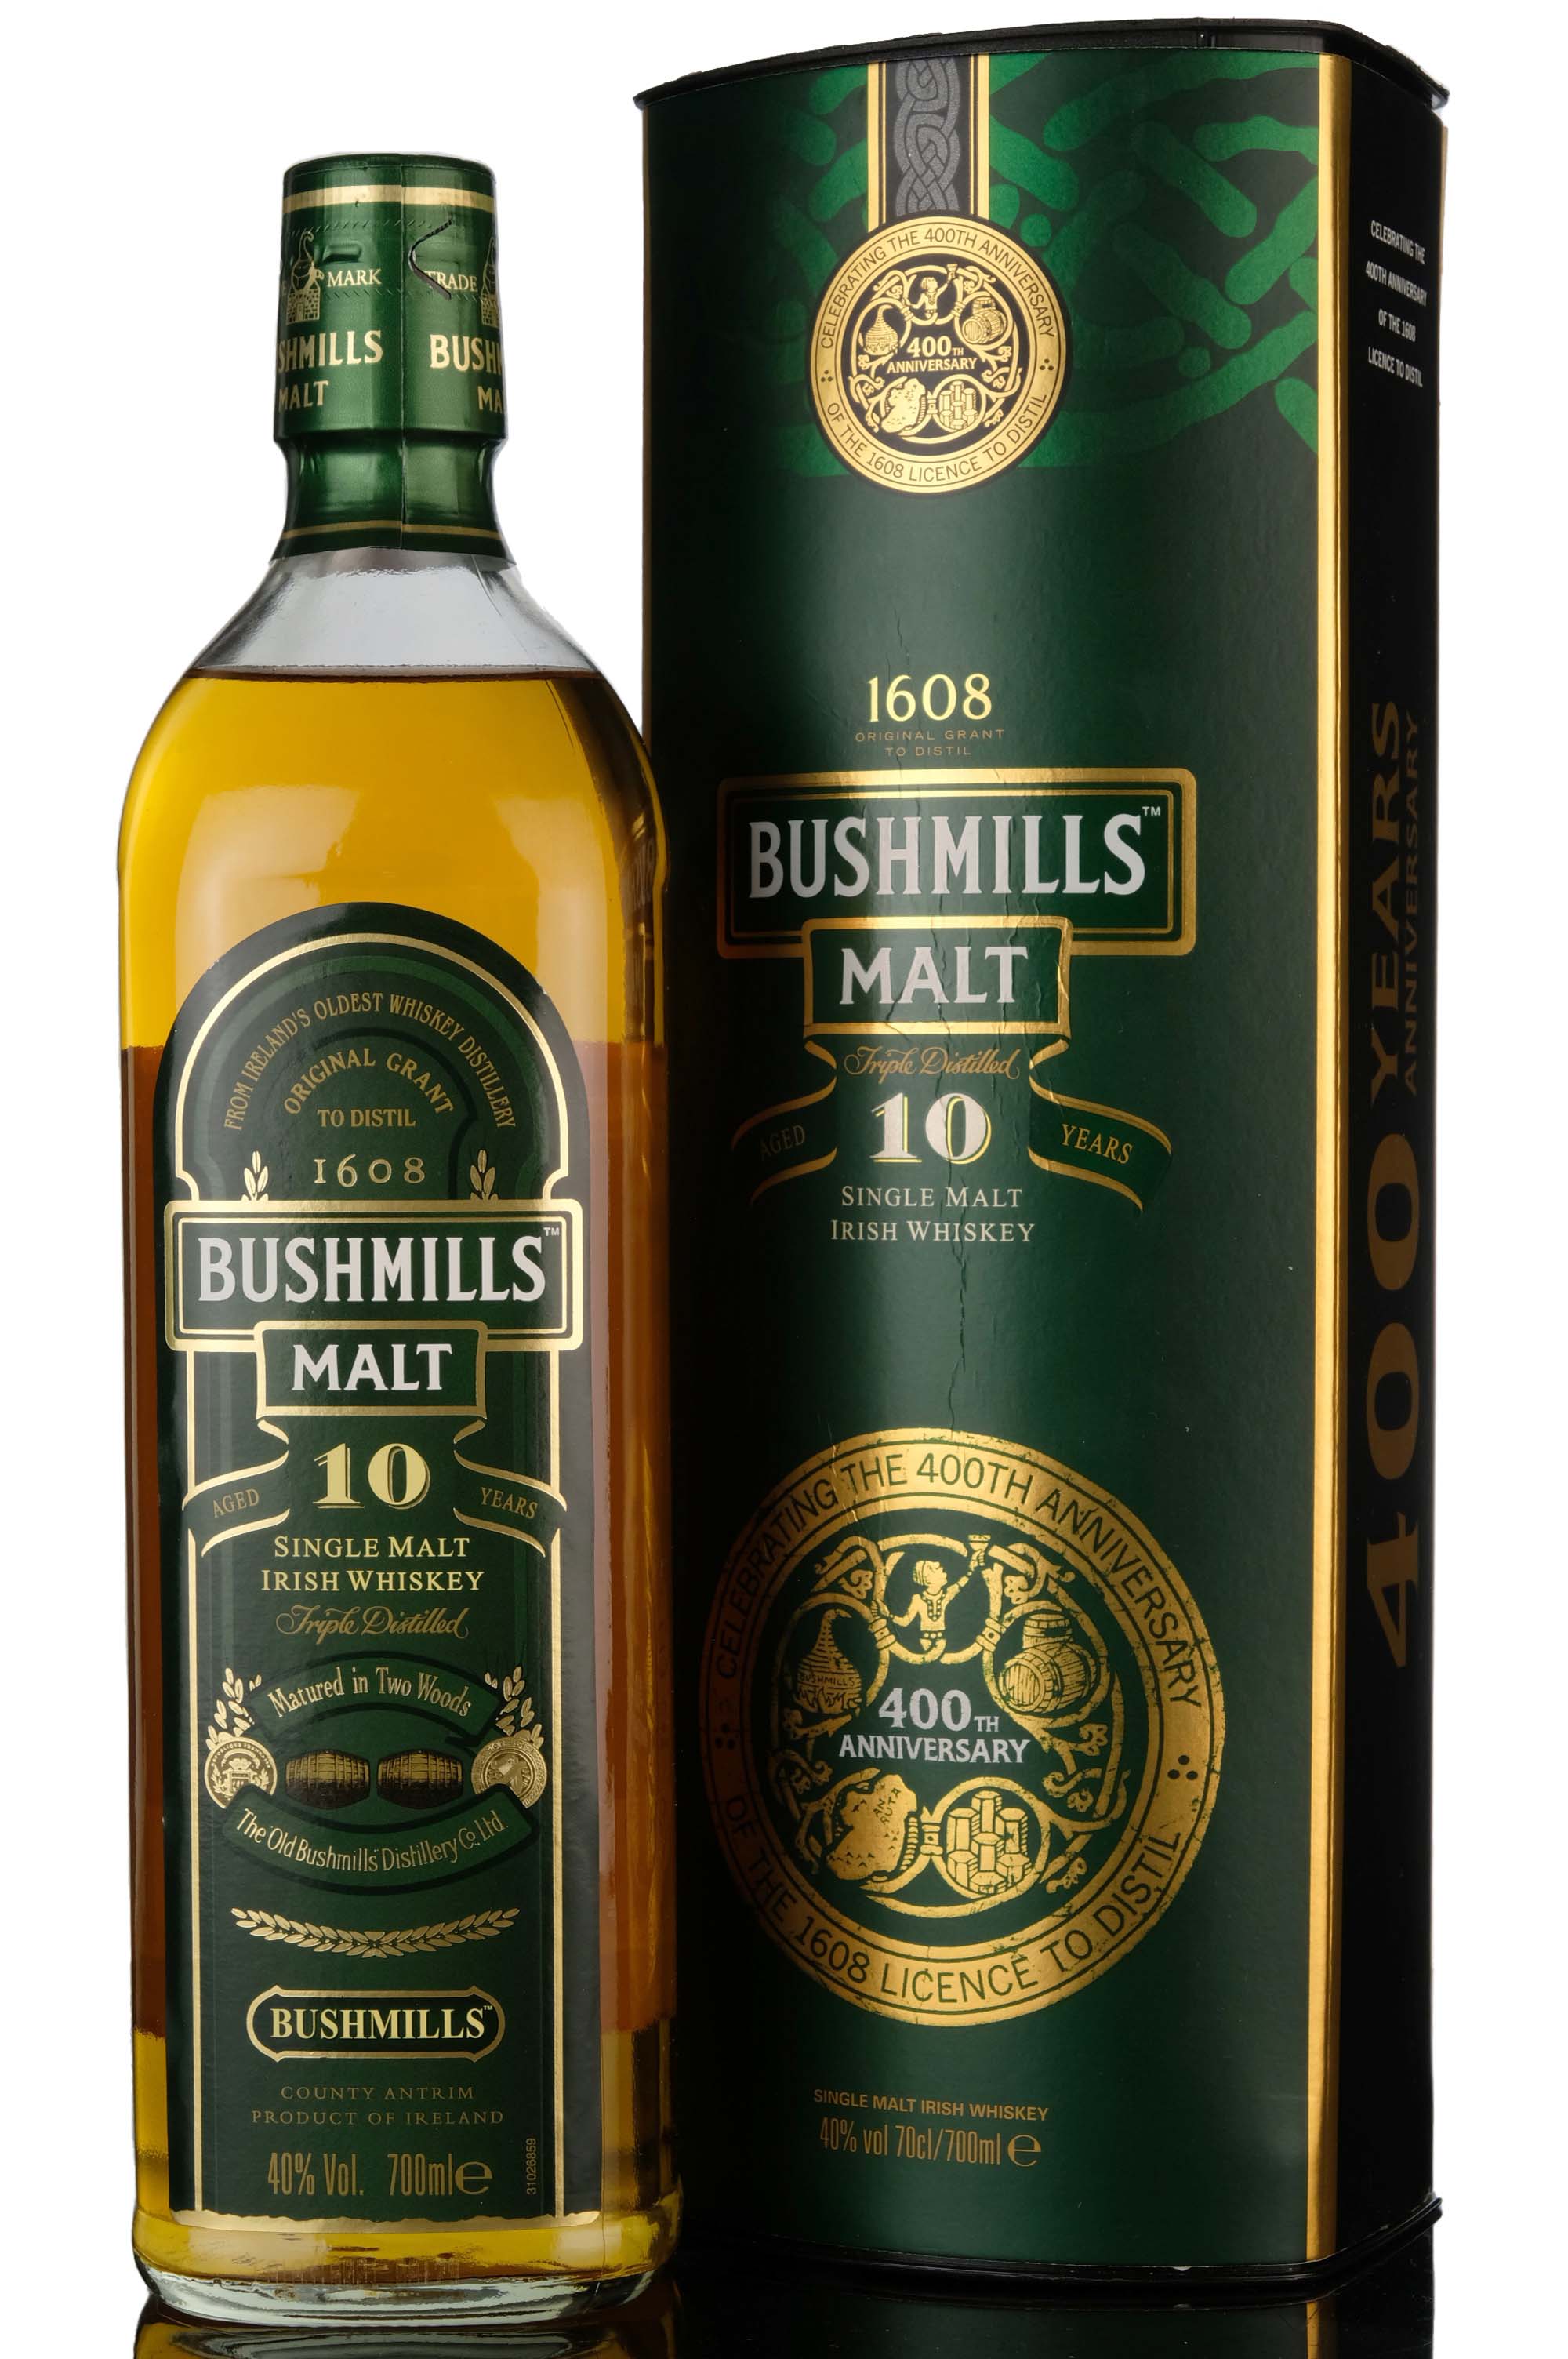 Bushmills Malt 10 Year Old - 400th Anniversary Of The Original Grant To Distill - 2008 Rel